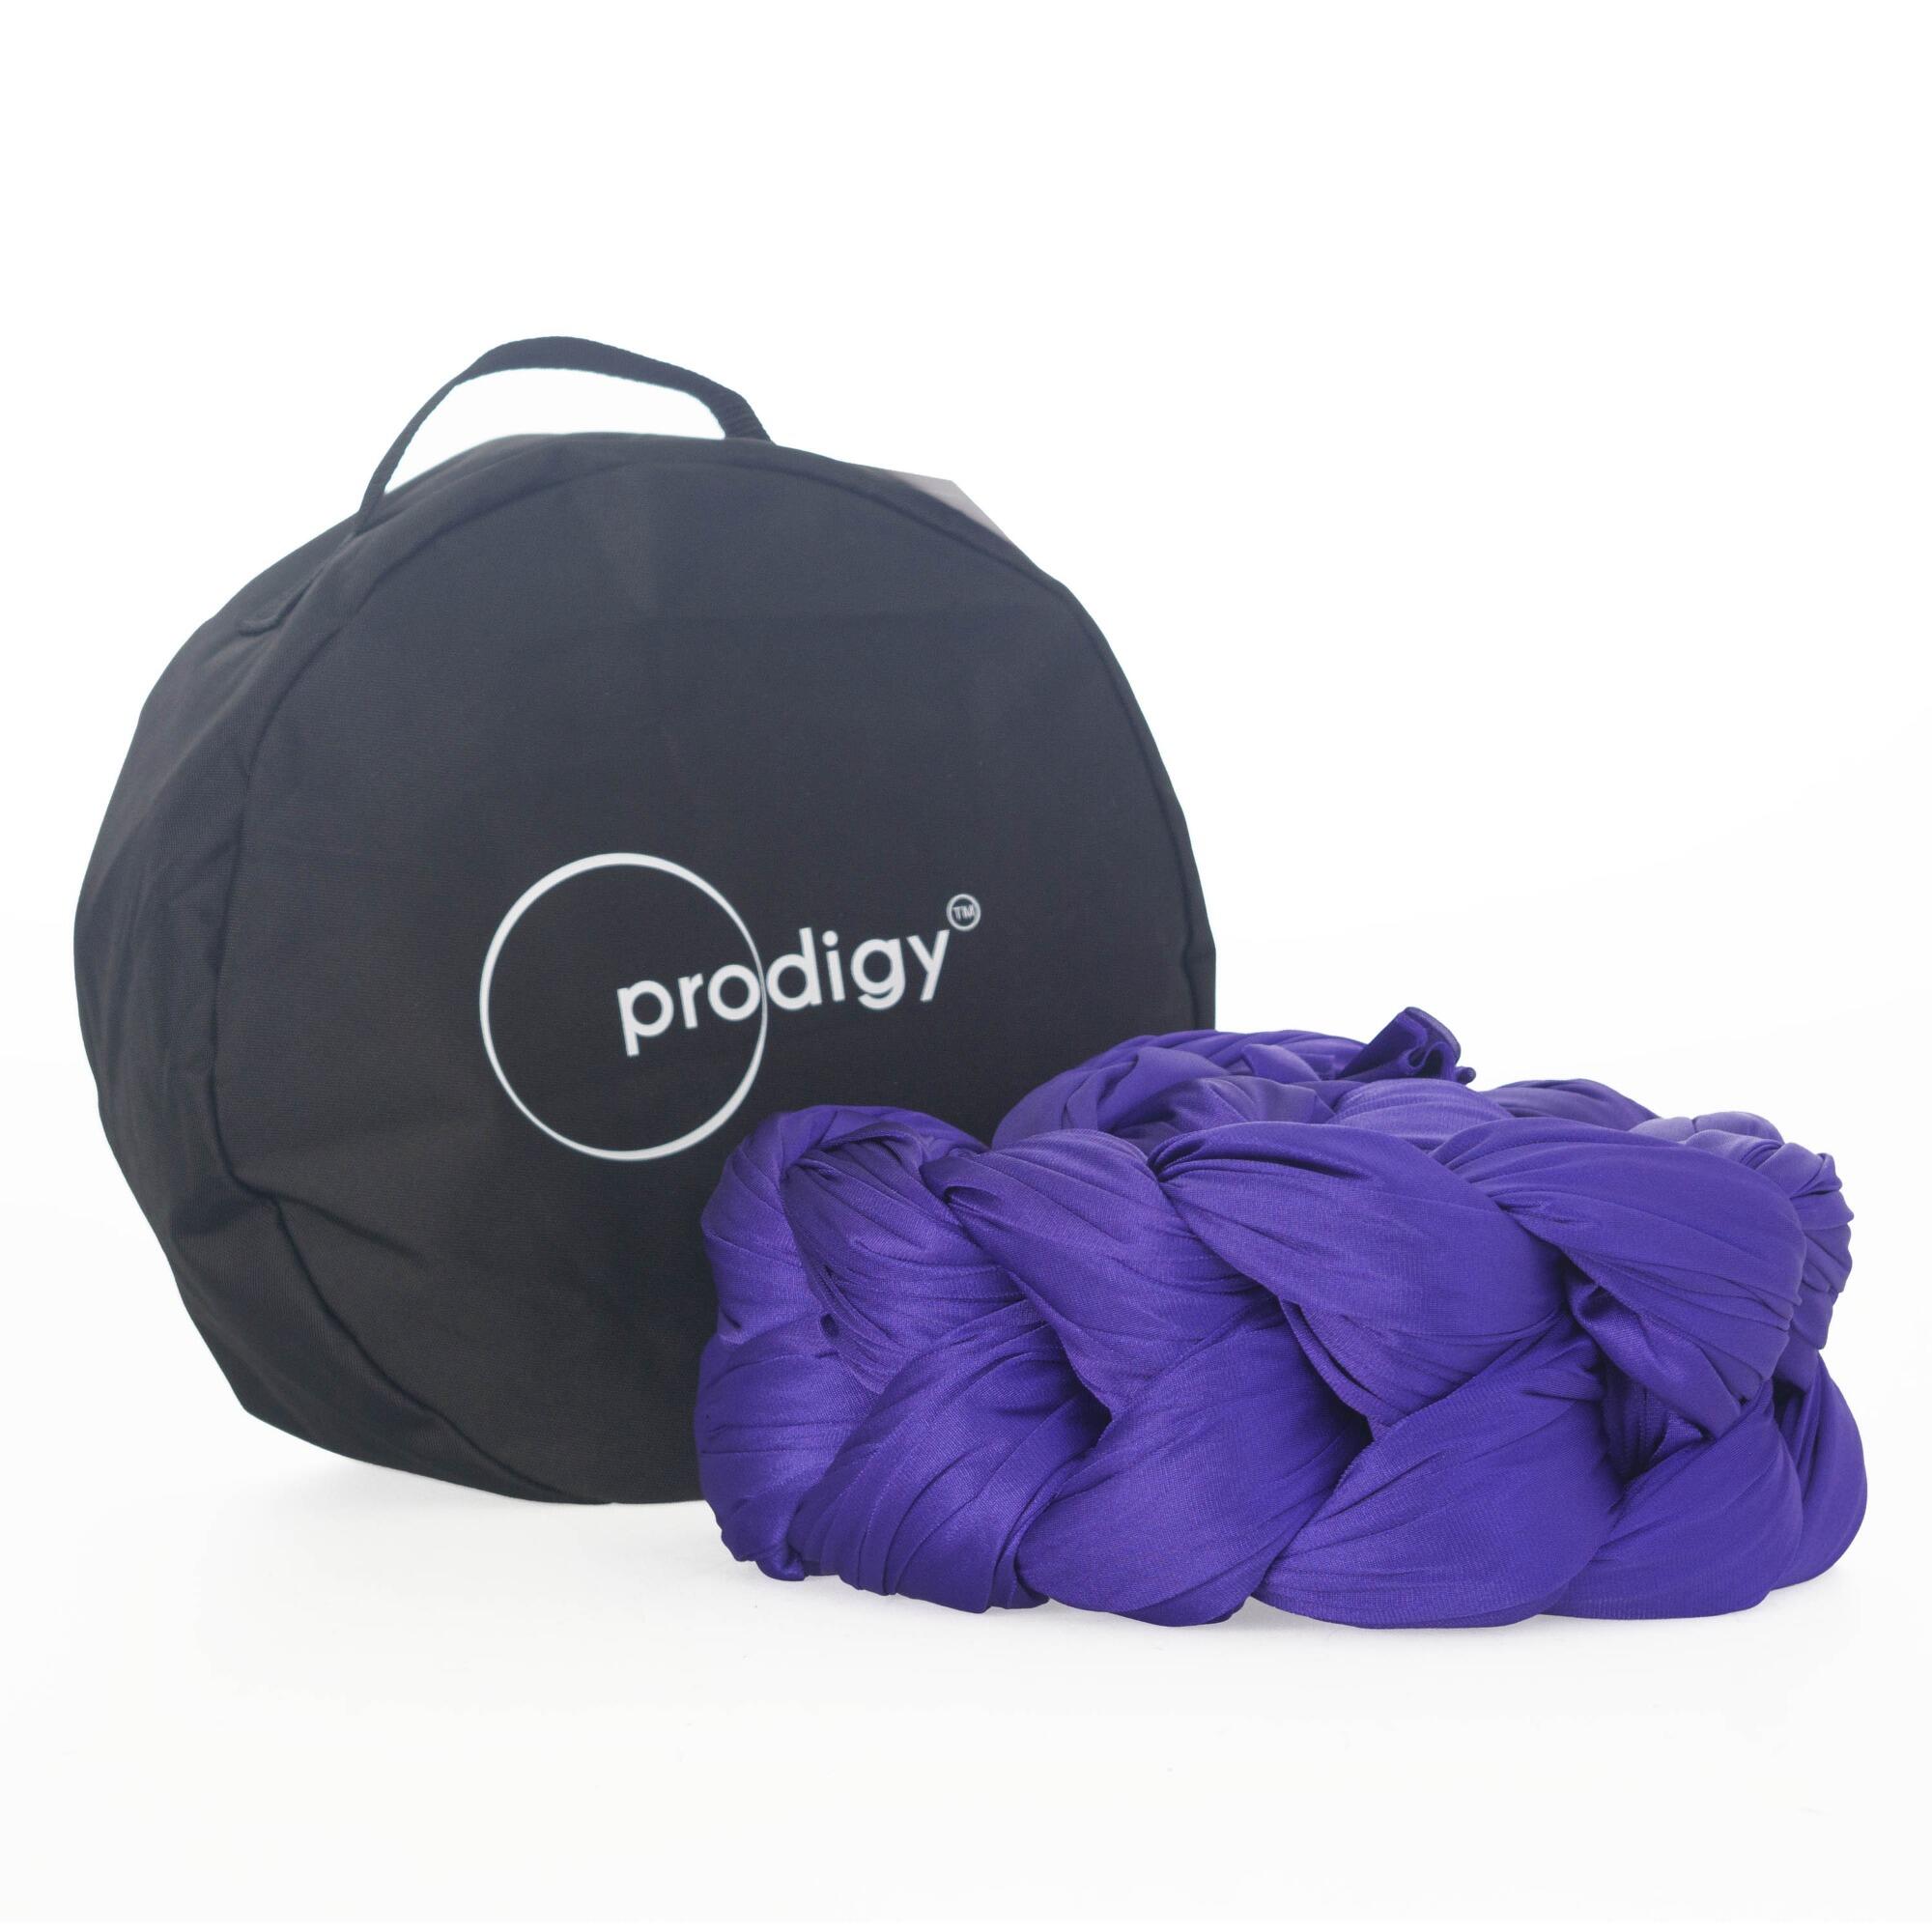 PRODIGY 6m Prodigy Aerial Fabric for Hammocks - Purple with round Prodigy bag